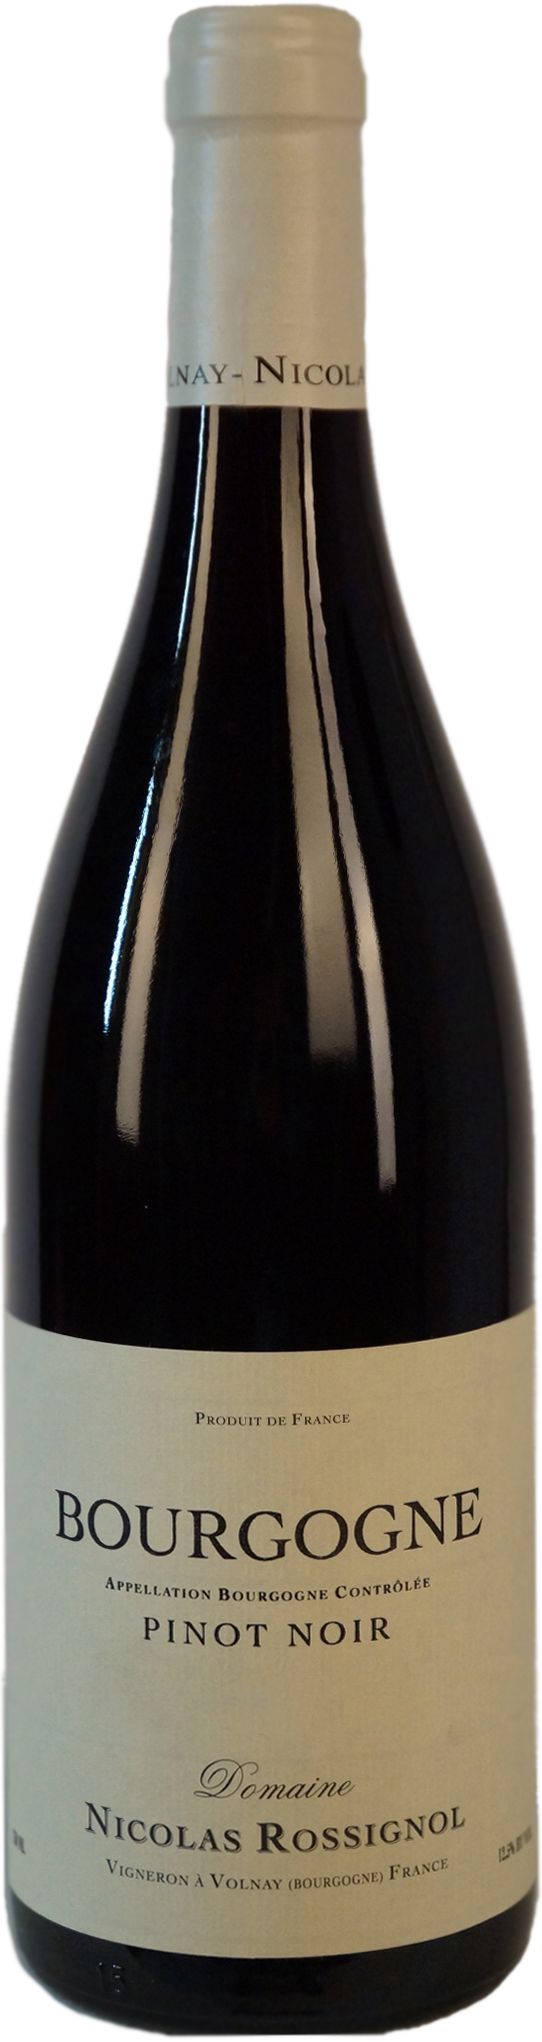 Domaine Nicolas Rossignol, Bourgogne Pinot Noir, 2009